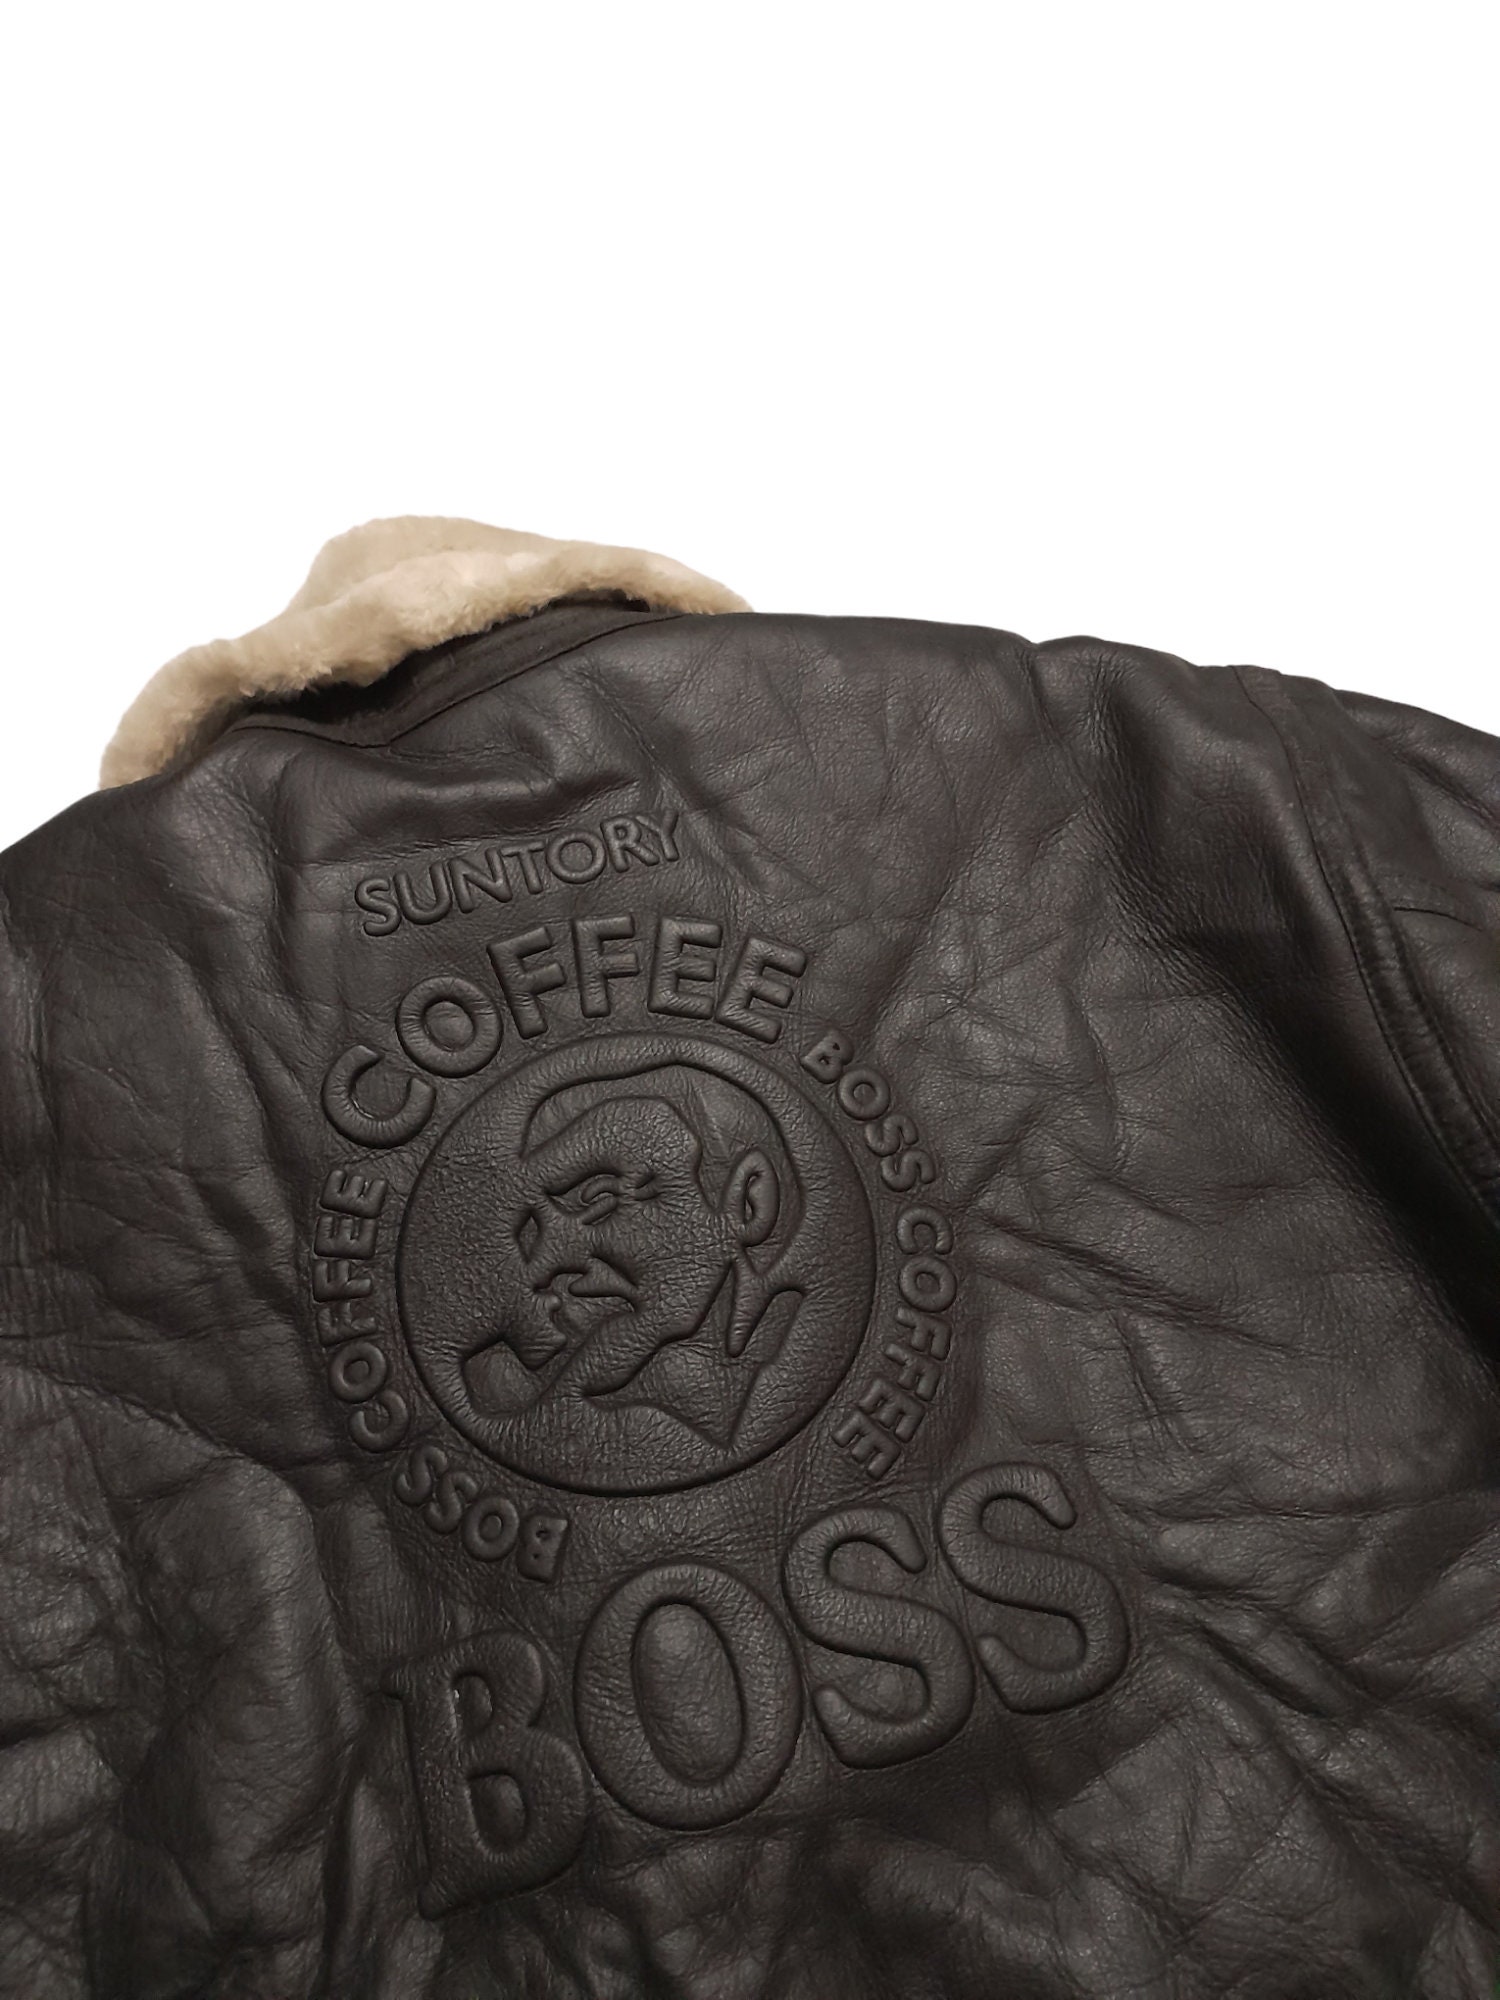 Limited Ed. Suntory Coffee Boss Leather B-3 Jacket 2000 L3 - Etsy